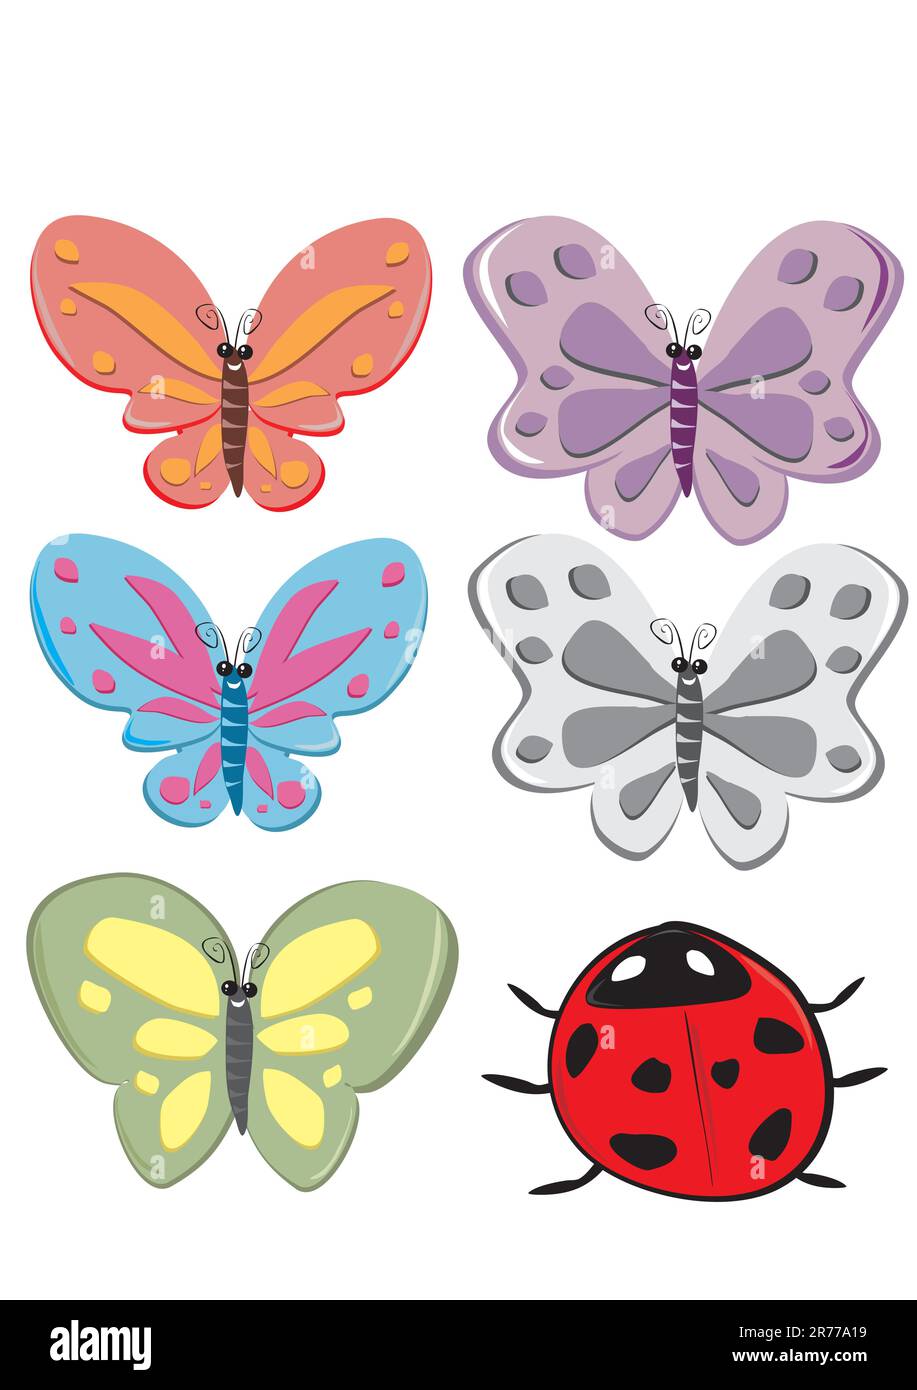 Butterfly illustration Stock Vector